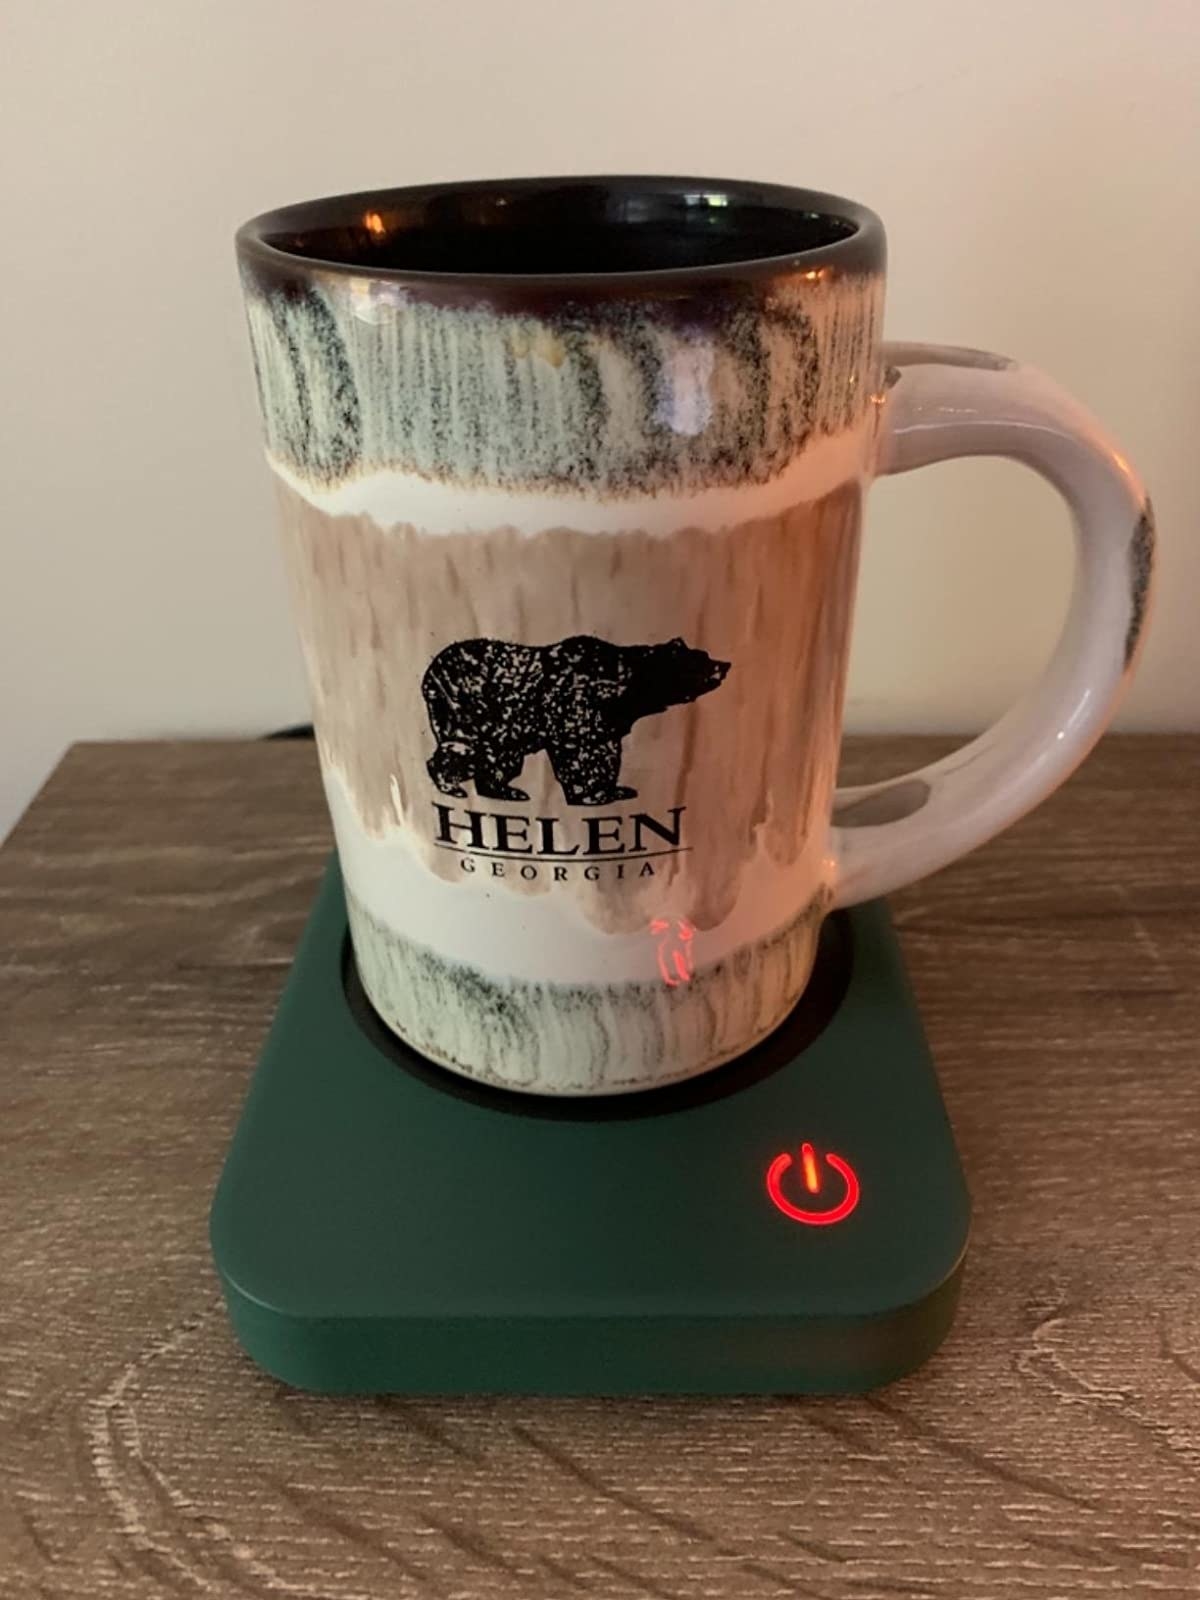 Reviewer image of mug sitting on green warmer